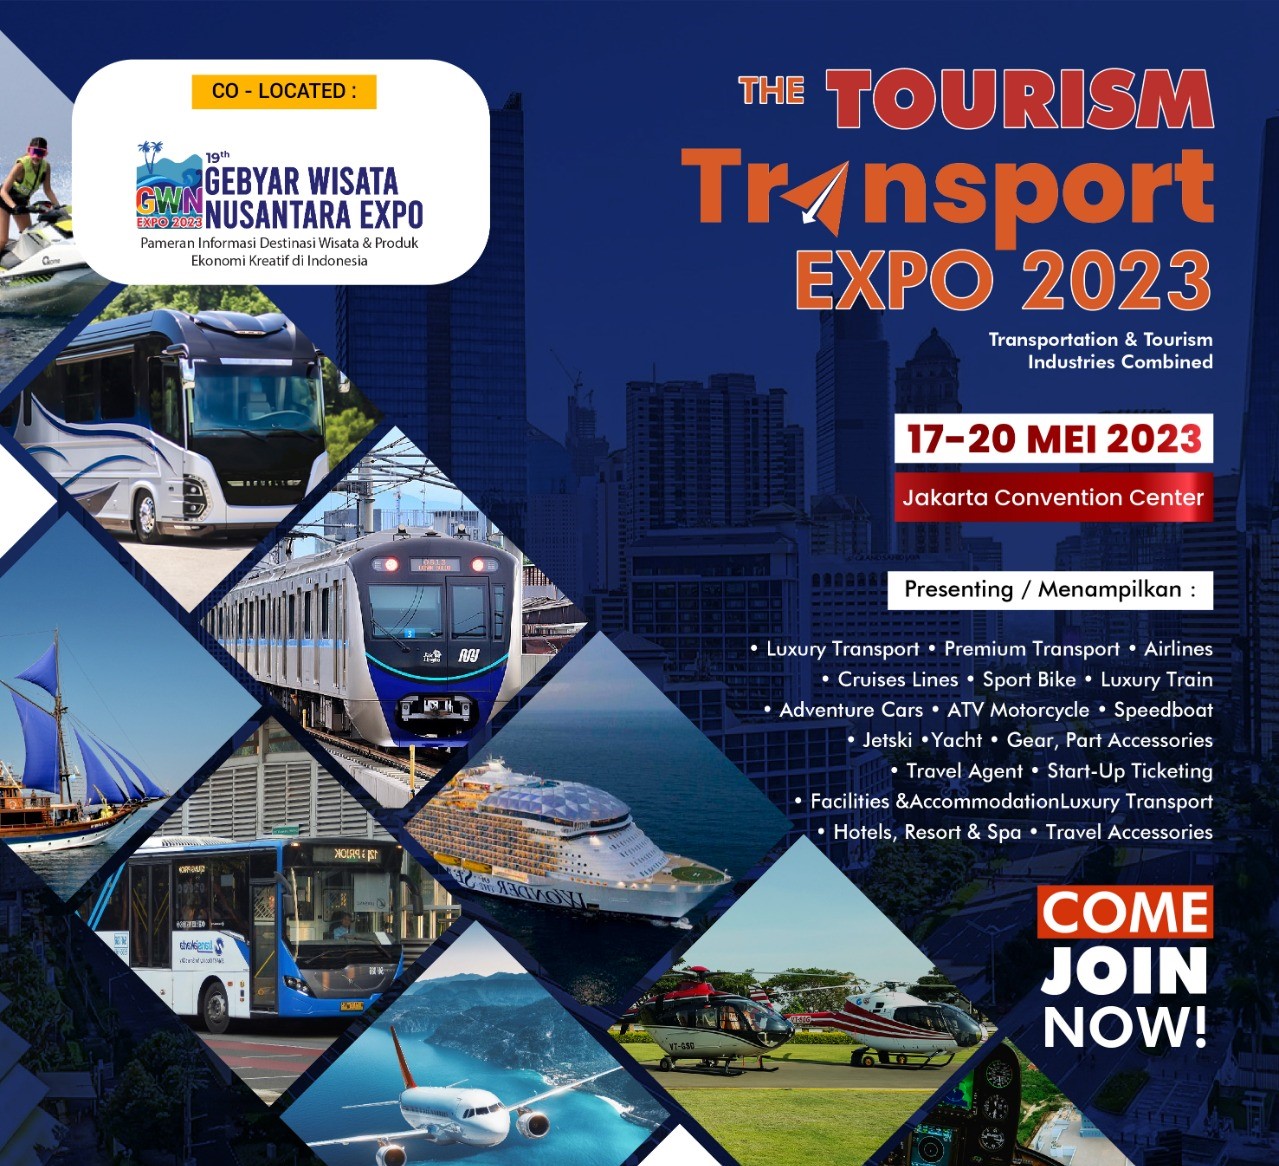 "TOURISM TRANSPORT EXPO 2023"